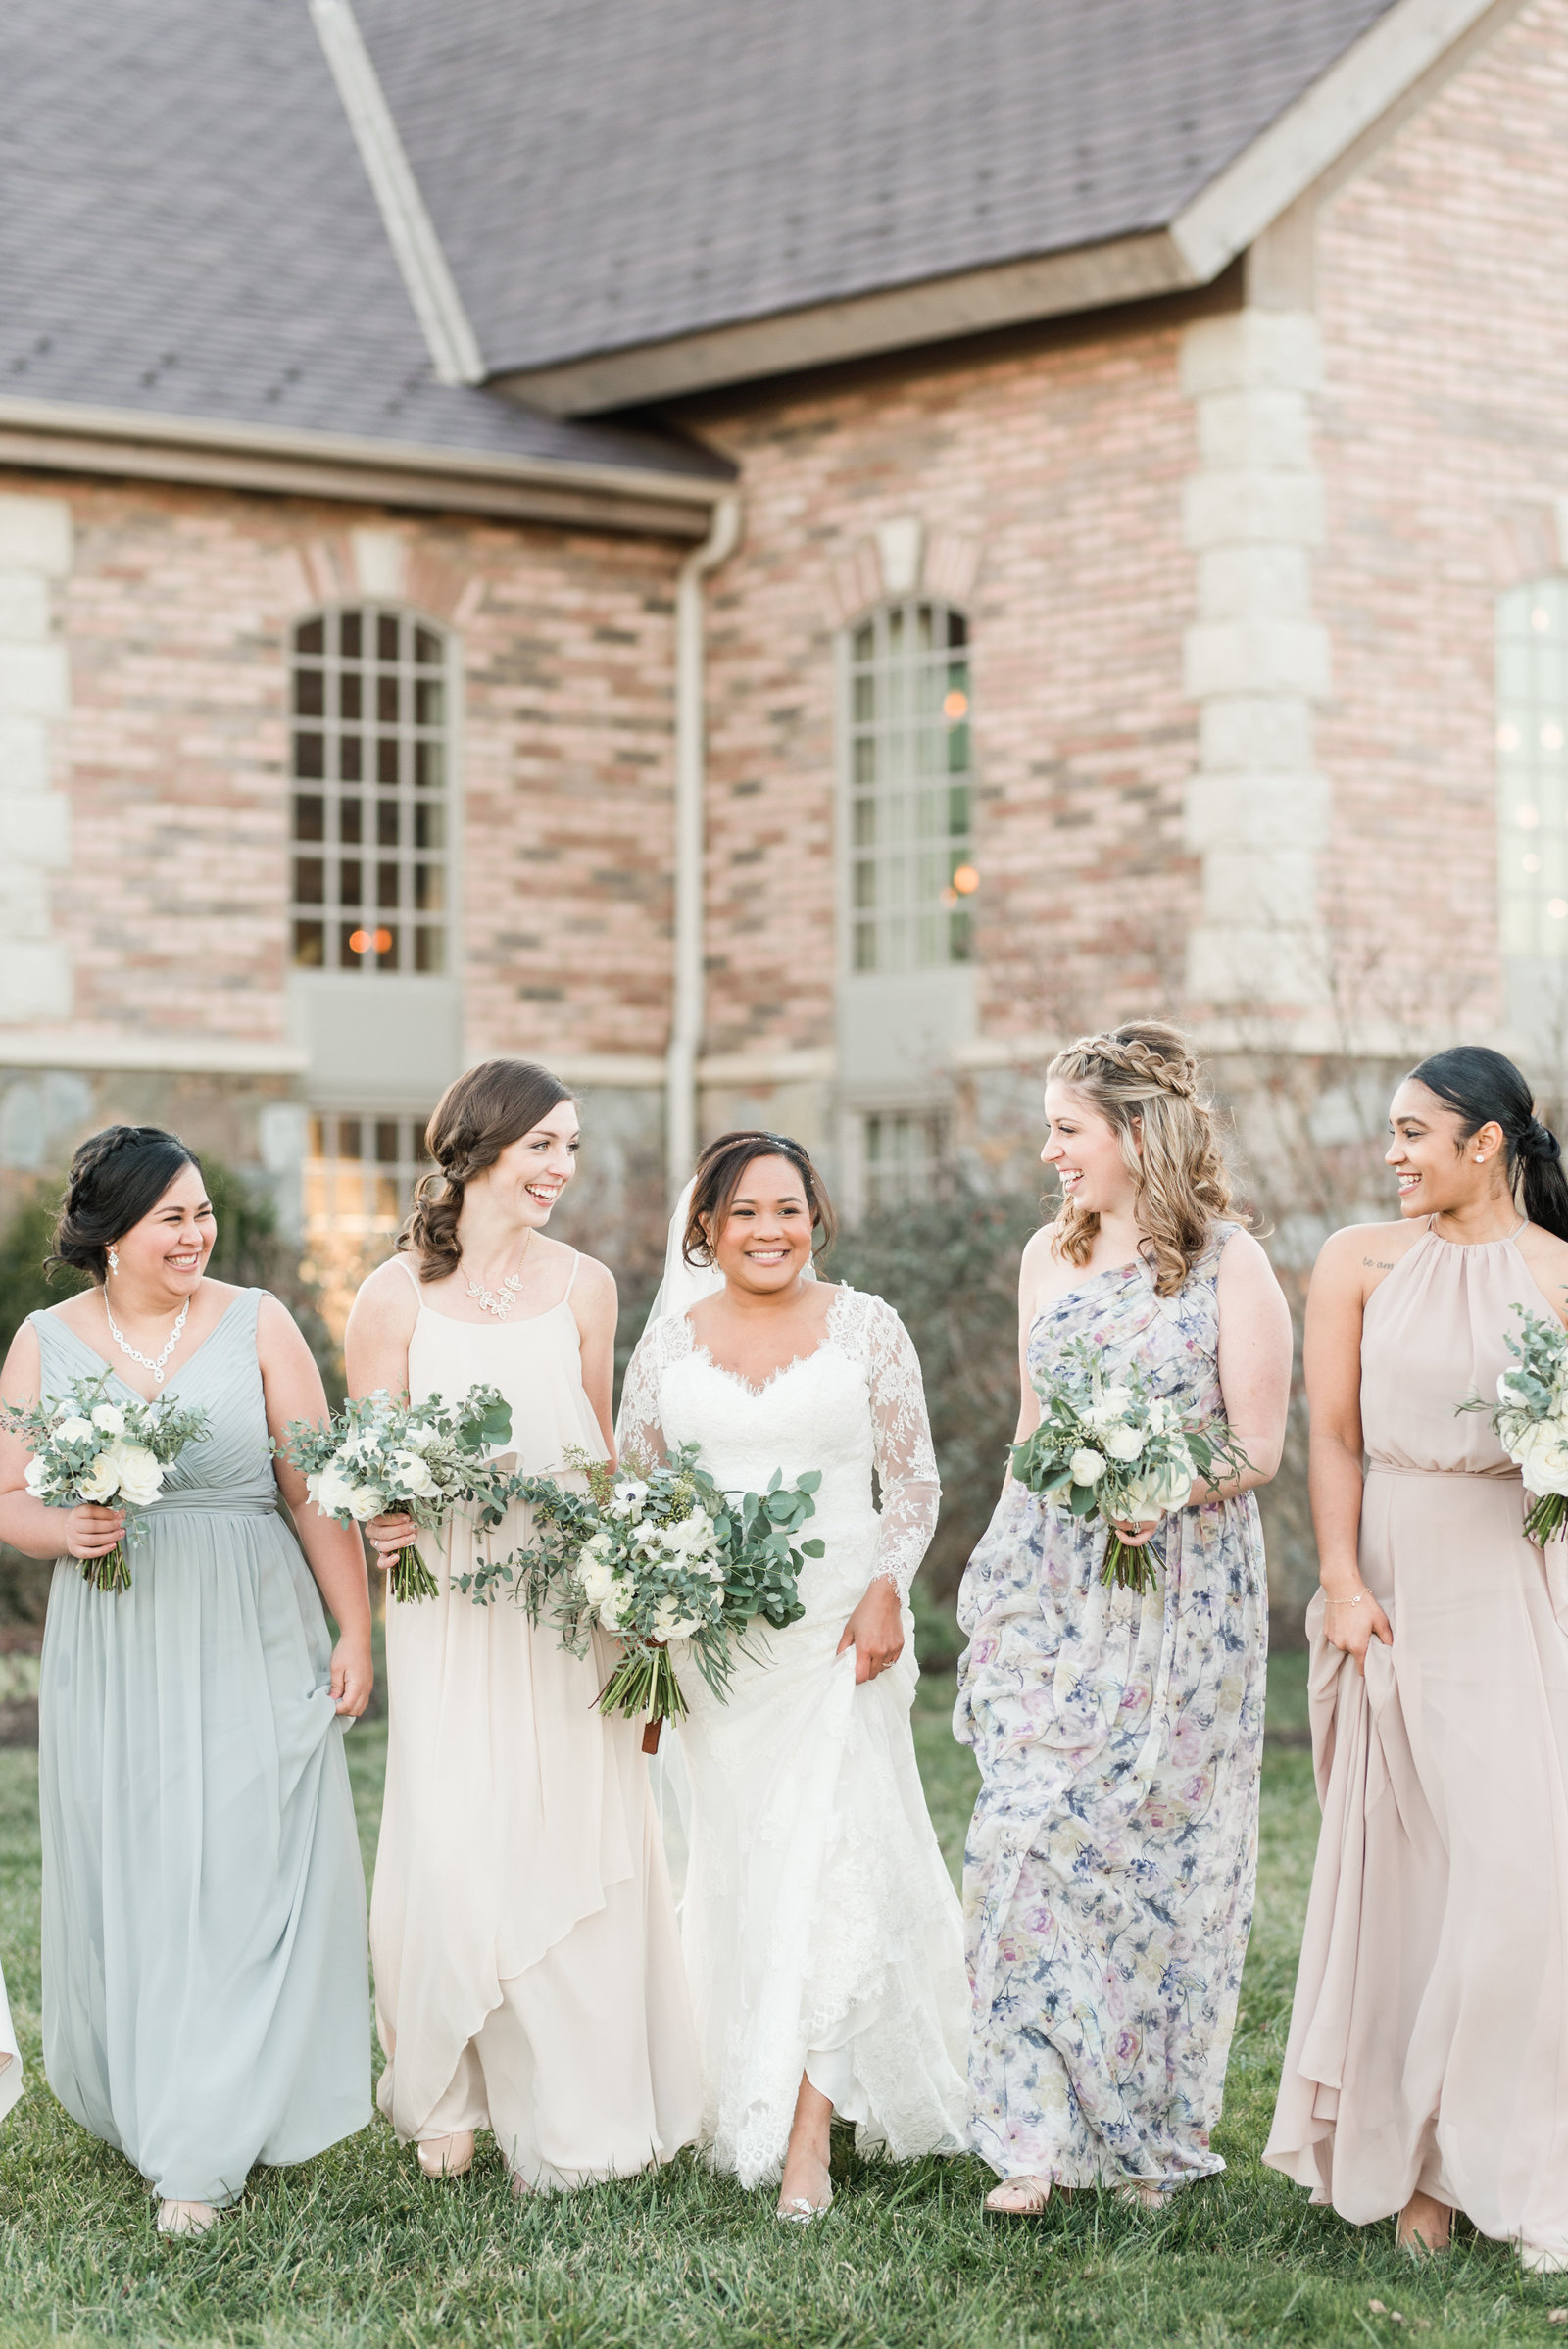 charlottesville-va-wedding-pastel-bridesmaids-dresses-by-virginia-hampton-roads-photogrpaher-photo811